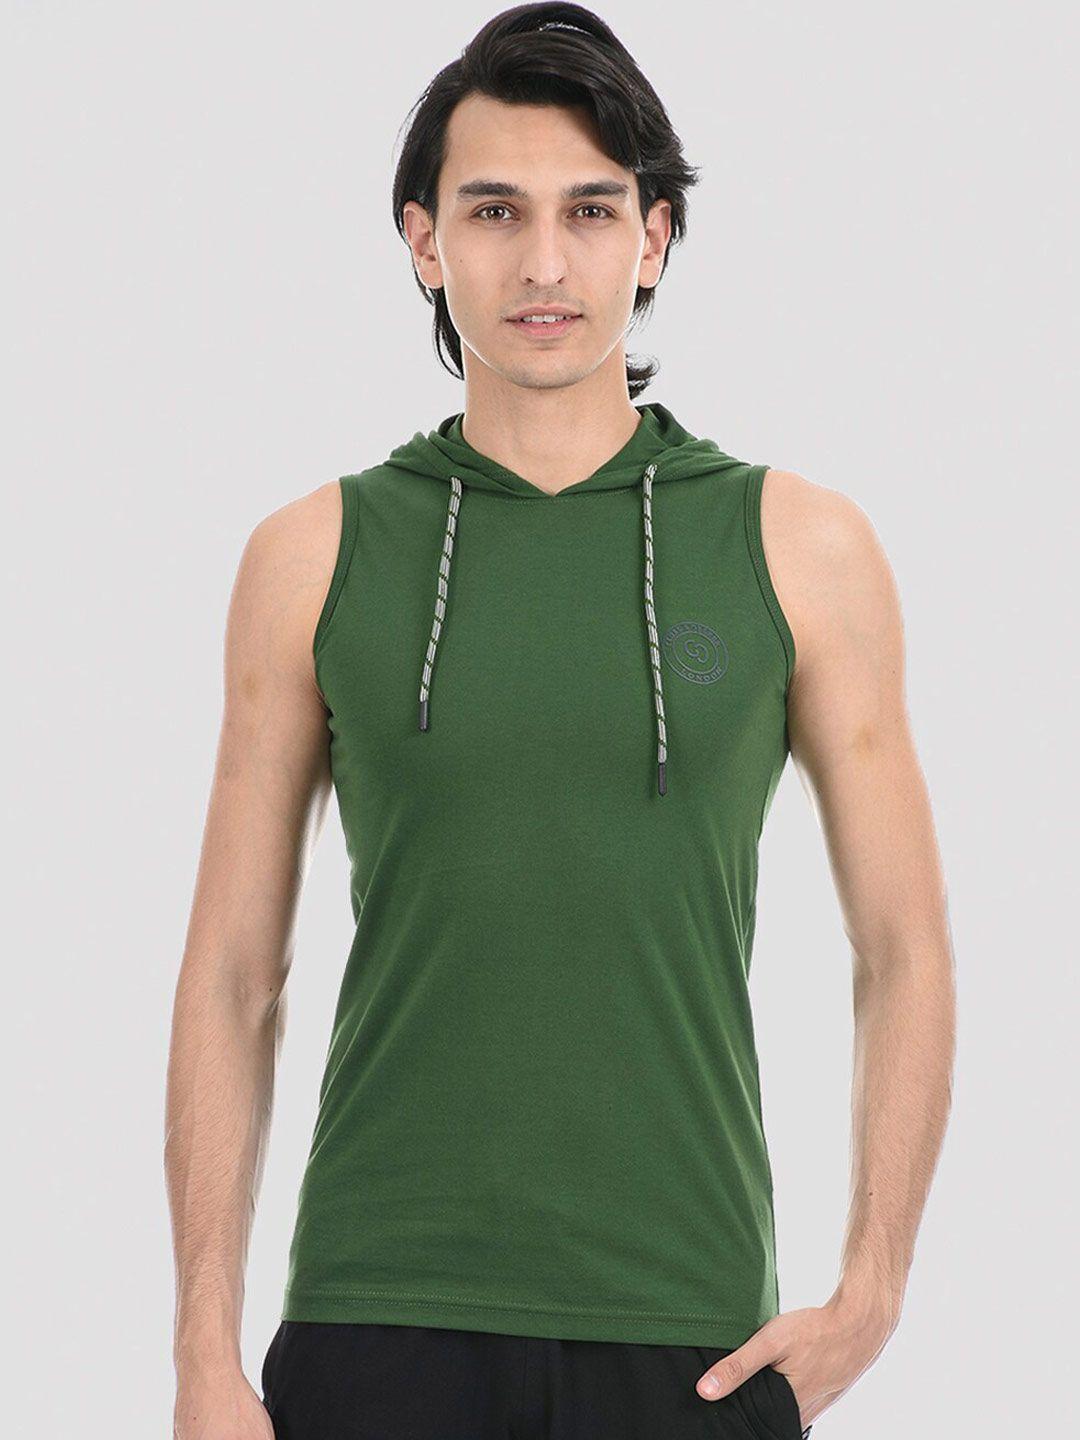 cloak & decker by monte carlo men olive green t-shirt